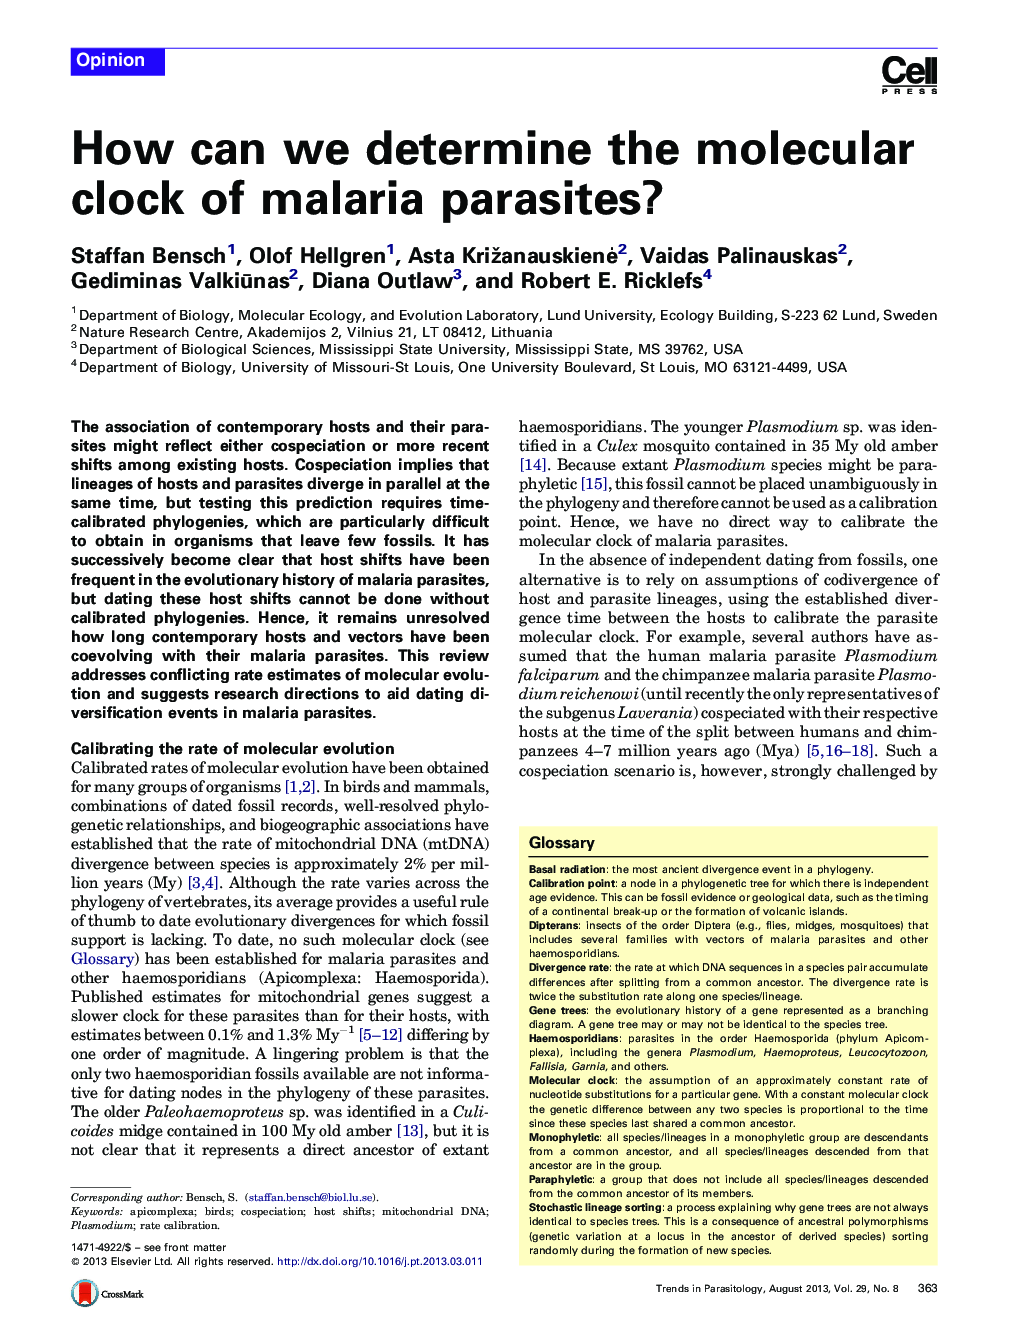 How can we determine the molecular clock of malaria parasites?